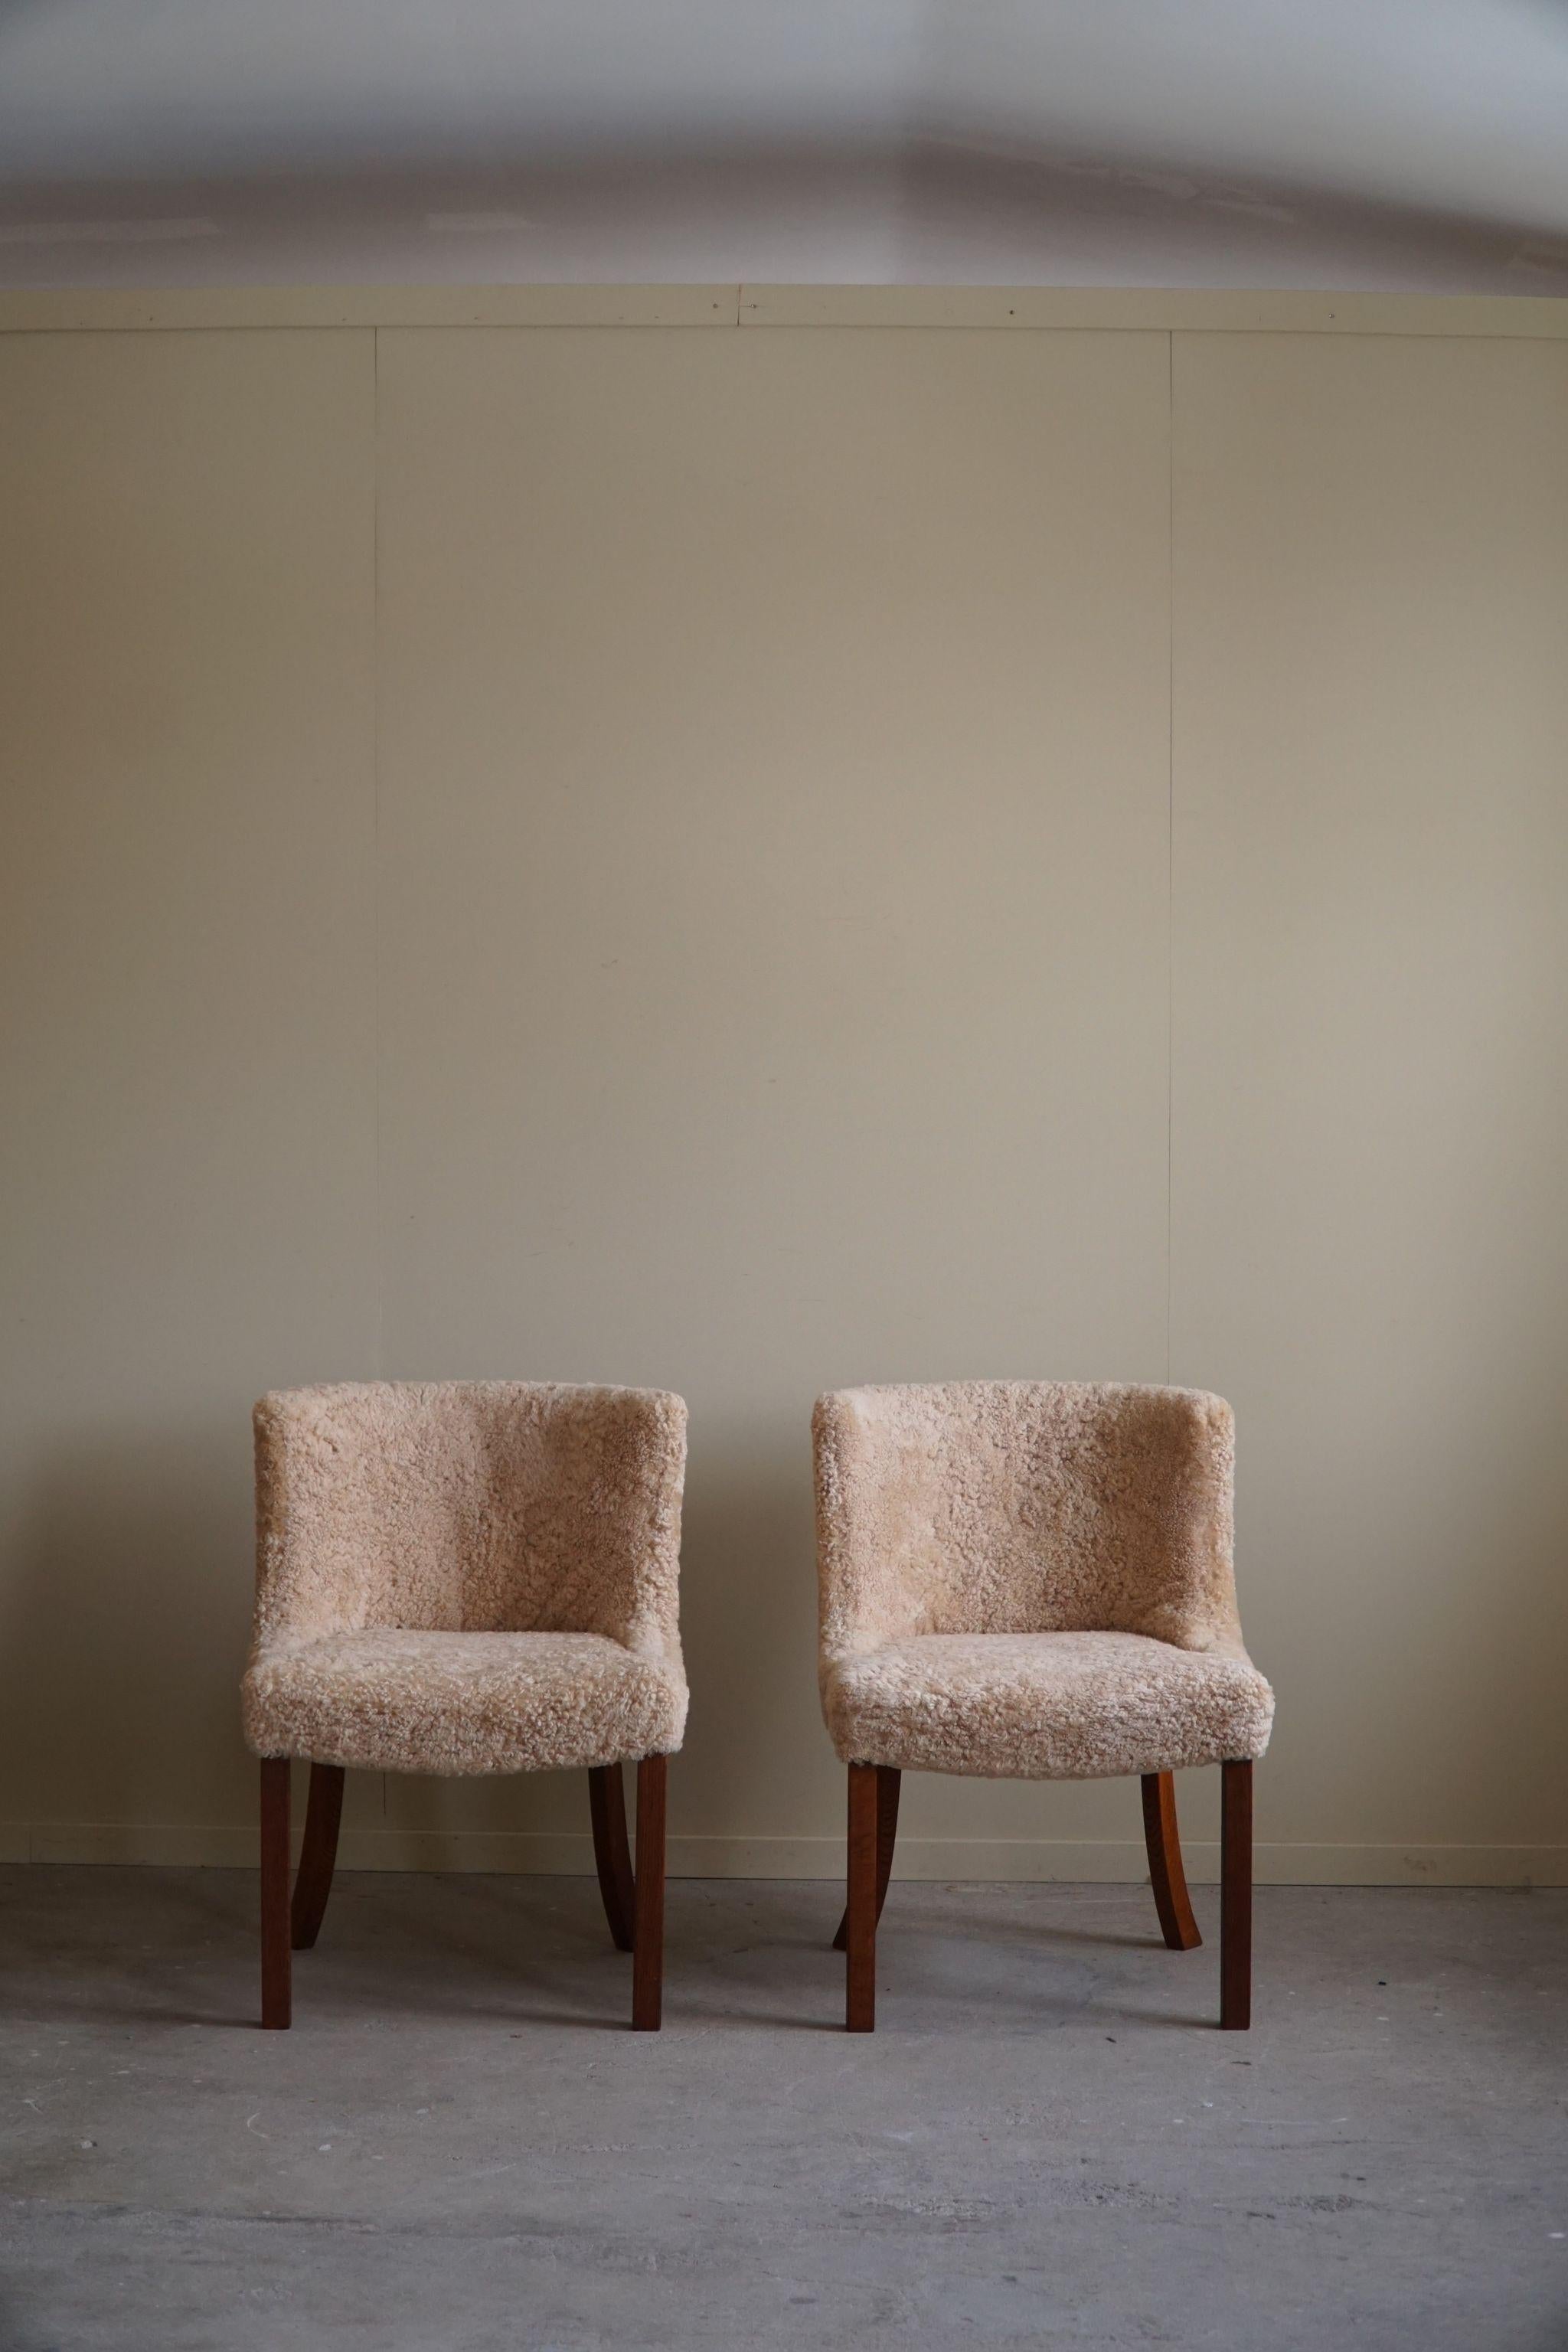 Art Deco A Pair of Classic Chairs in Oak and Lambswool, Danish Modern, Kaj Gottlob, 1950s For Sale